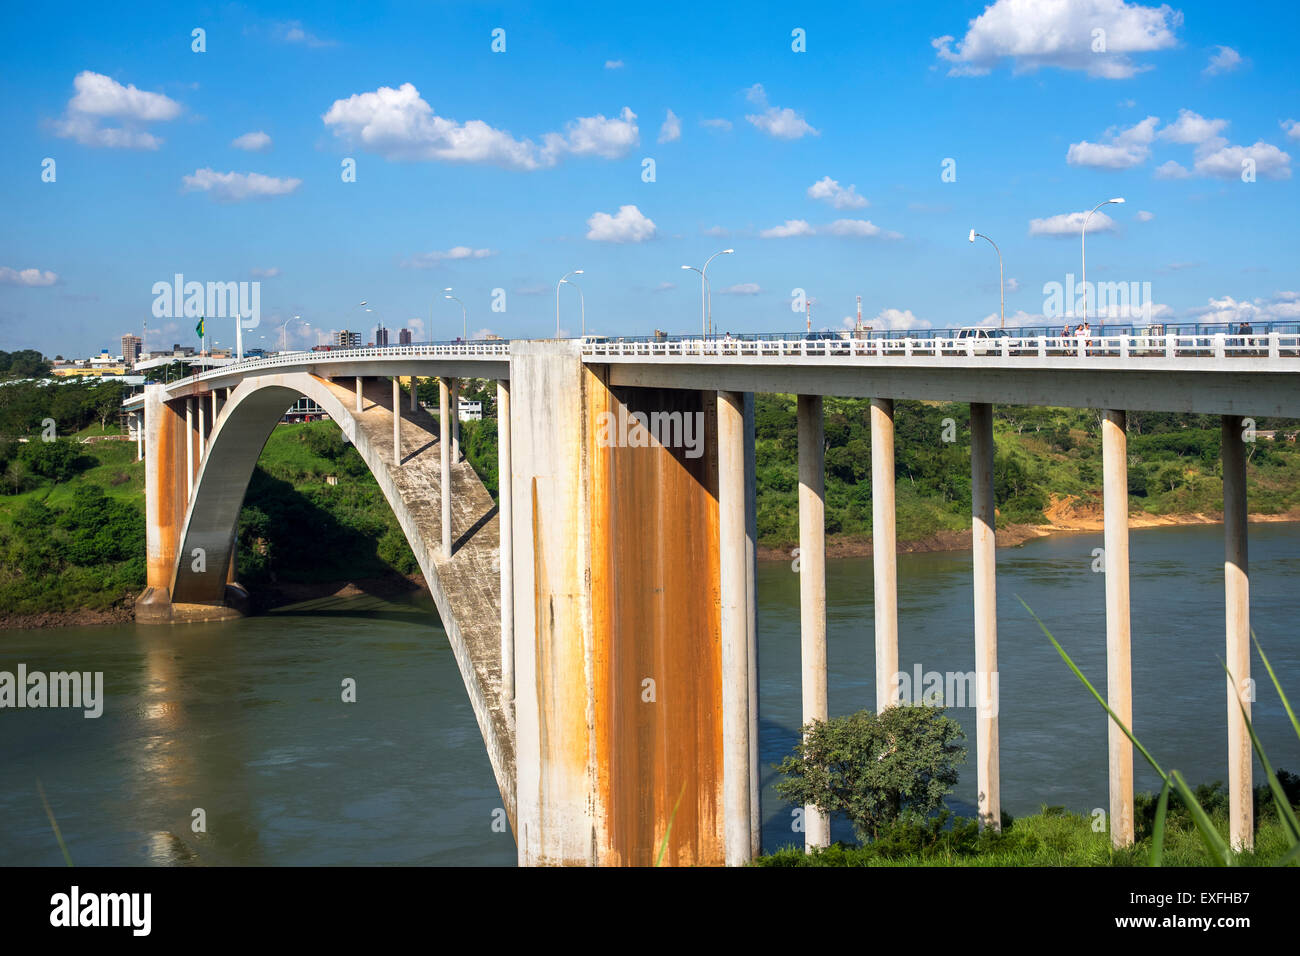 View of the Friendship Bridge (Ponte da Amizade), connecting Foz do Iguacu, Brazil, to Ciudad del Este in Paraguay. Stock Photo